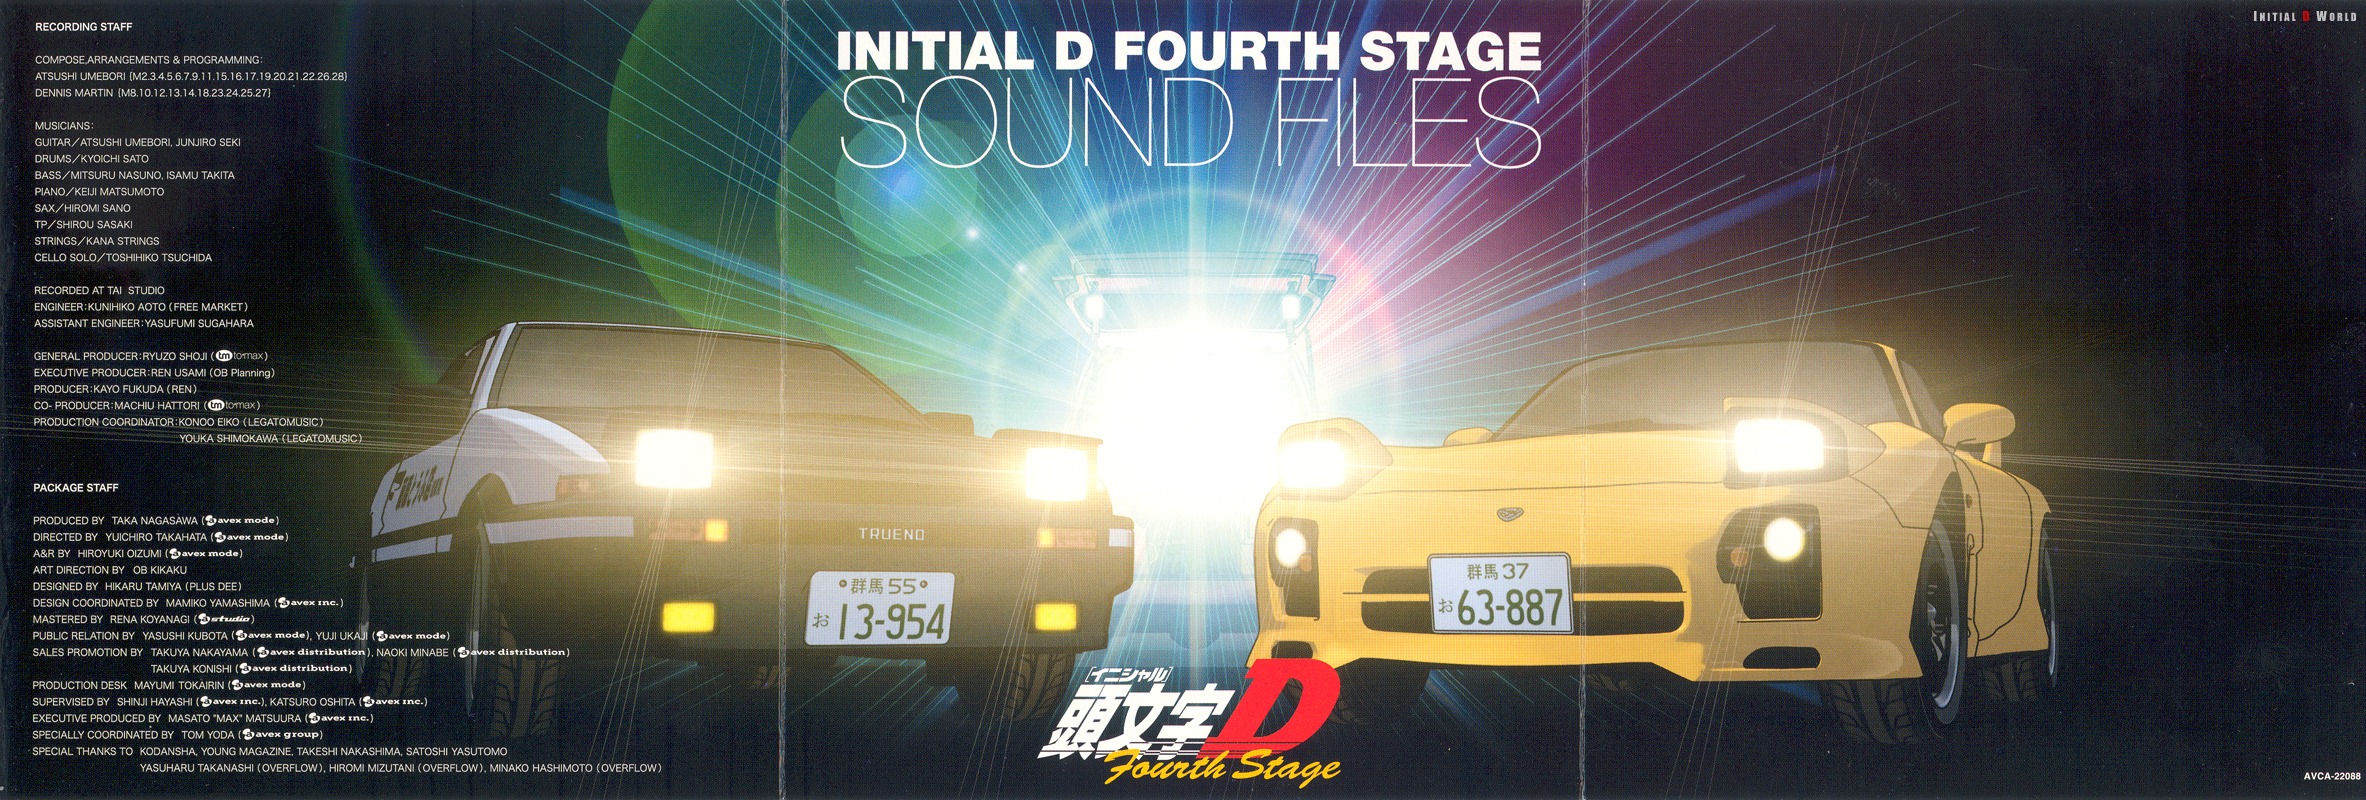 Initial D First Stage Sound Files, Volume 2 - comprar mp3, todas las  canciones